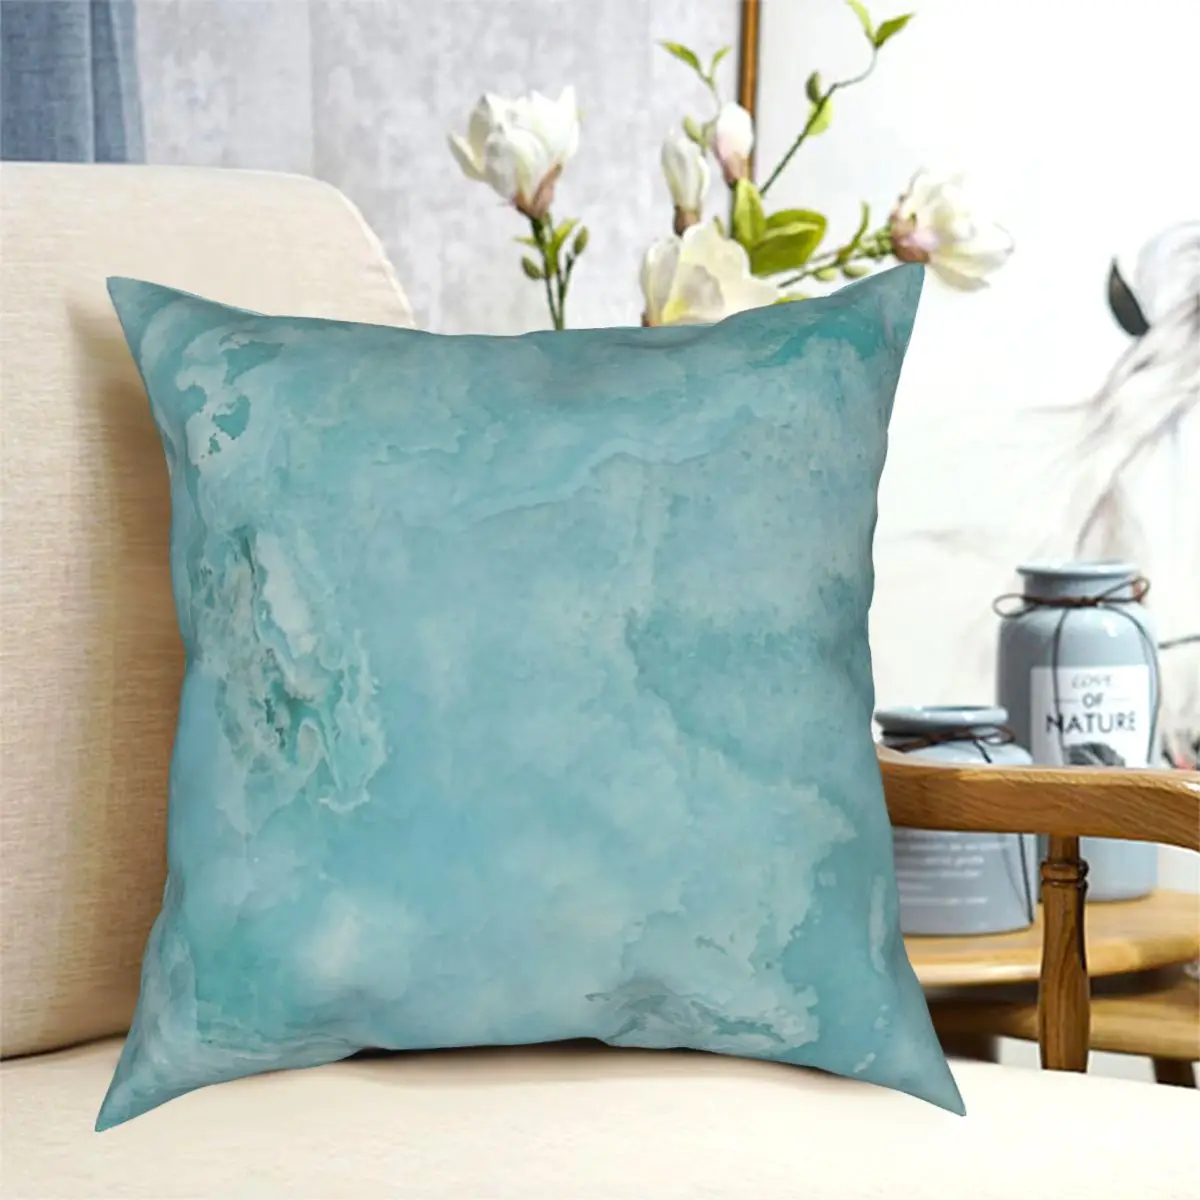 

Aqua Turquoise Turquoise Sea Marble Pillow Cushion Cover Decorative Pillowcases Case Home Sofa Cushions 40x40,45x45cm